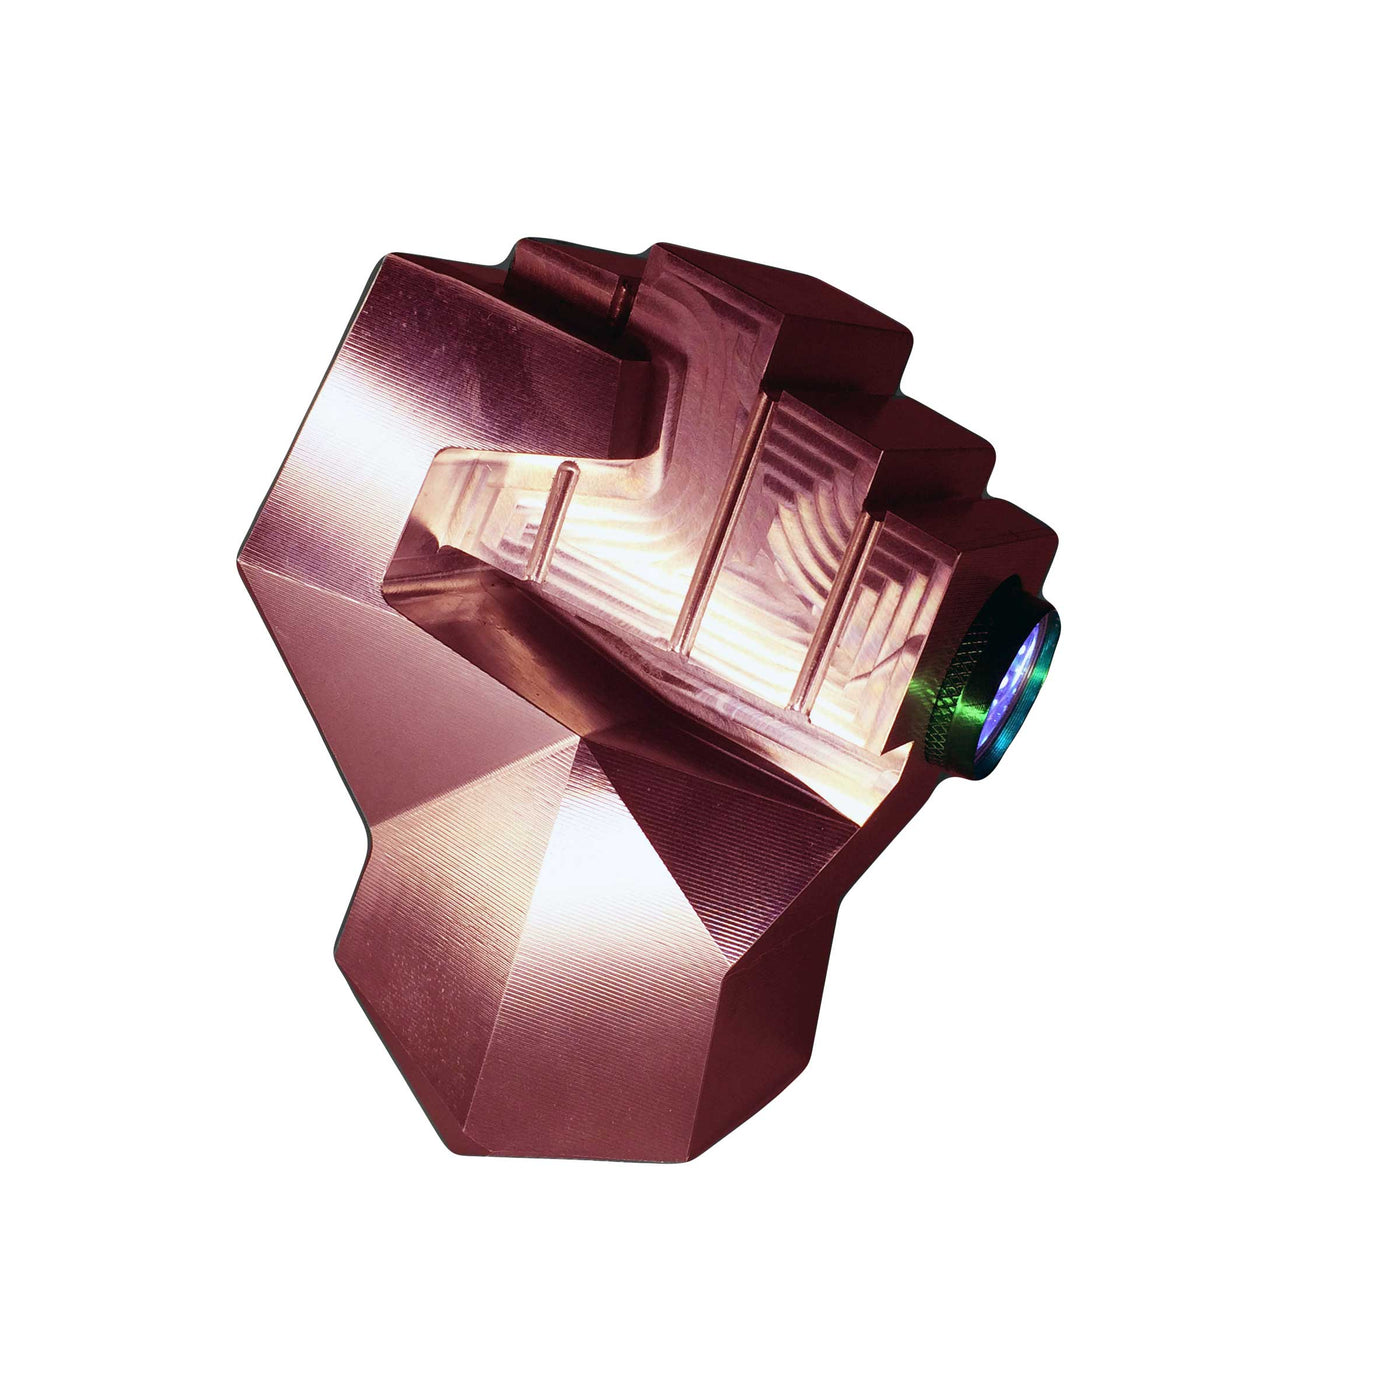 Lamp - Candlestick Holder SESSANT8 Copper by Denis Santachiara for Cyrcus Design 01